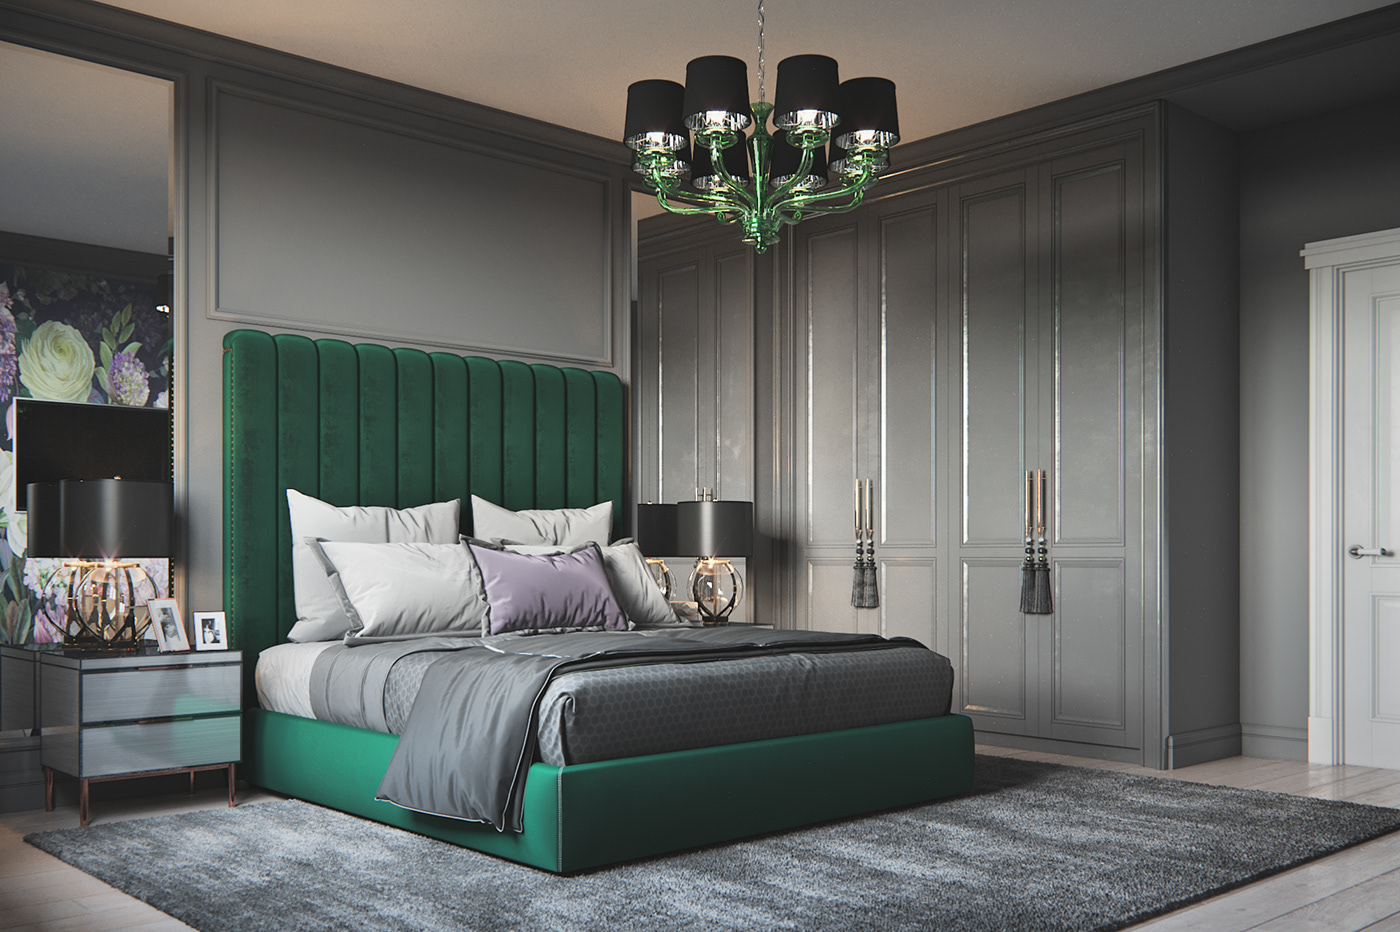 visualization bed room design Interior визуализация спальня интерьер дизайн интерьера Render interiors